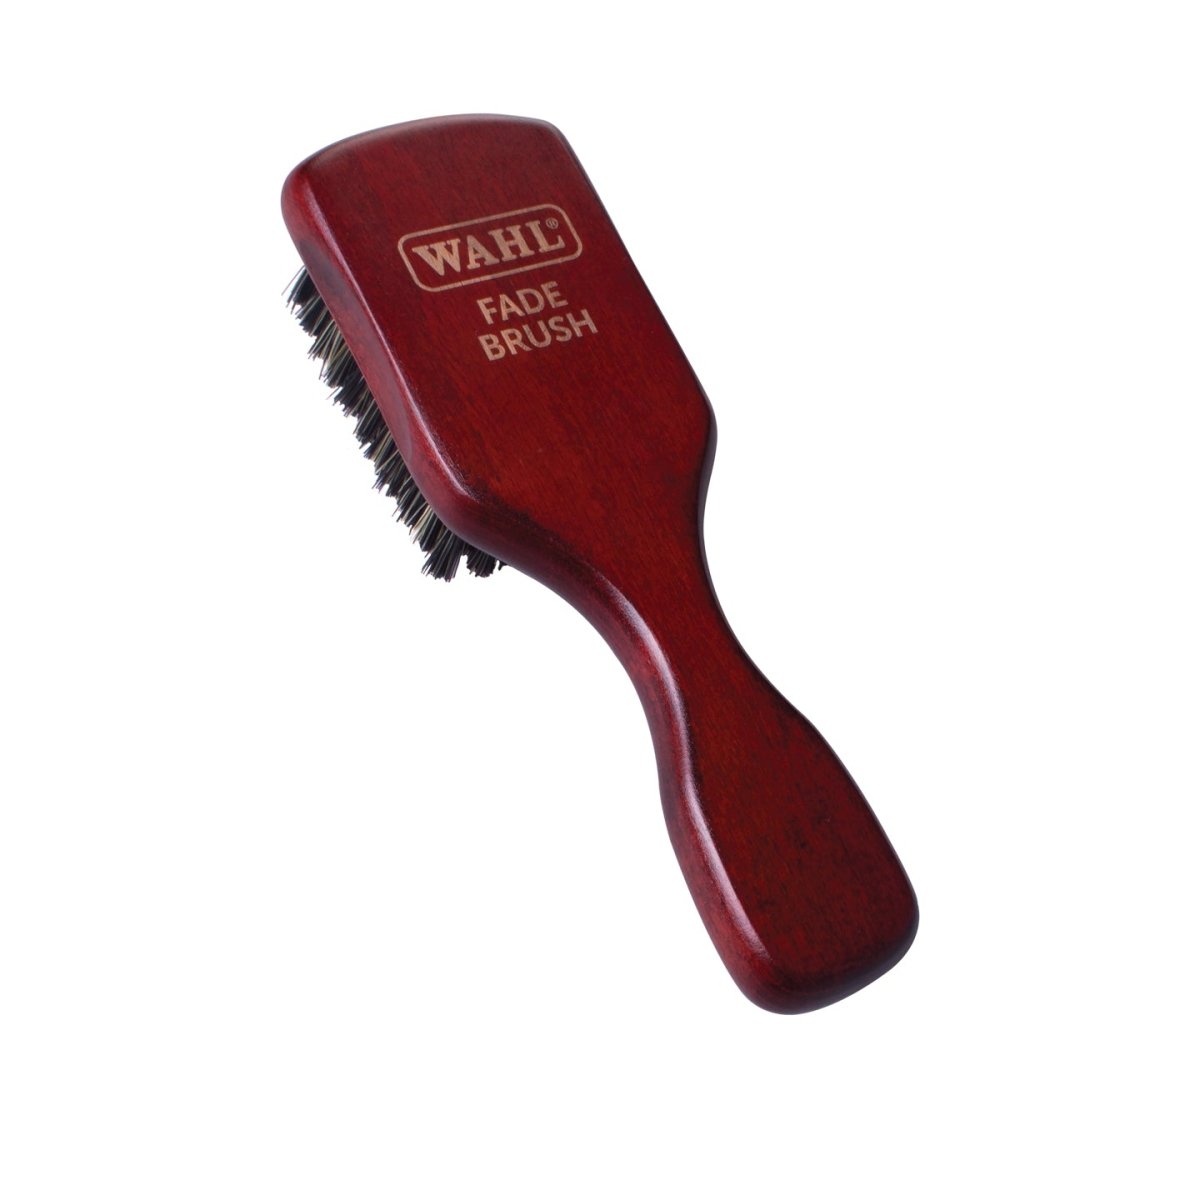 Wahl Fade Brush - Southwestsix Cosmetics Wahl Fade Brush Hair Combs Wahl Southwestsix Cosmetics 5037127022603 Wahl Fade Brush